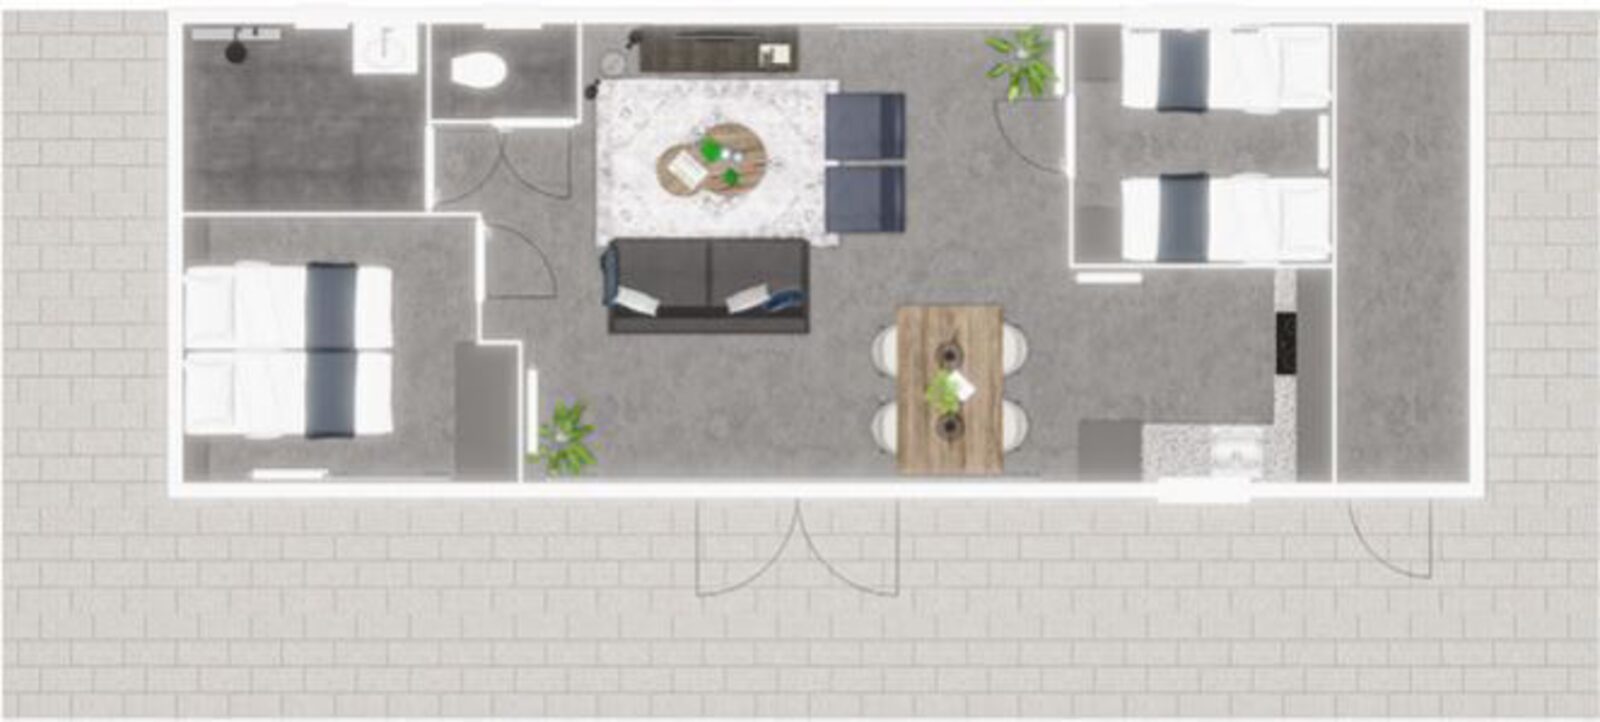 Premium Lodge I 4 personen (58 m²)